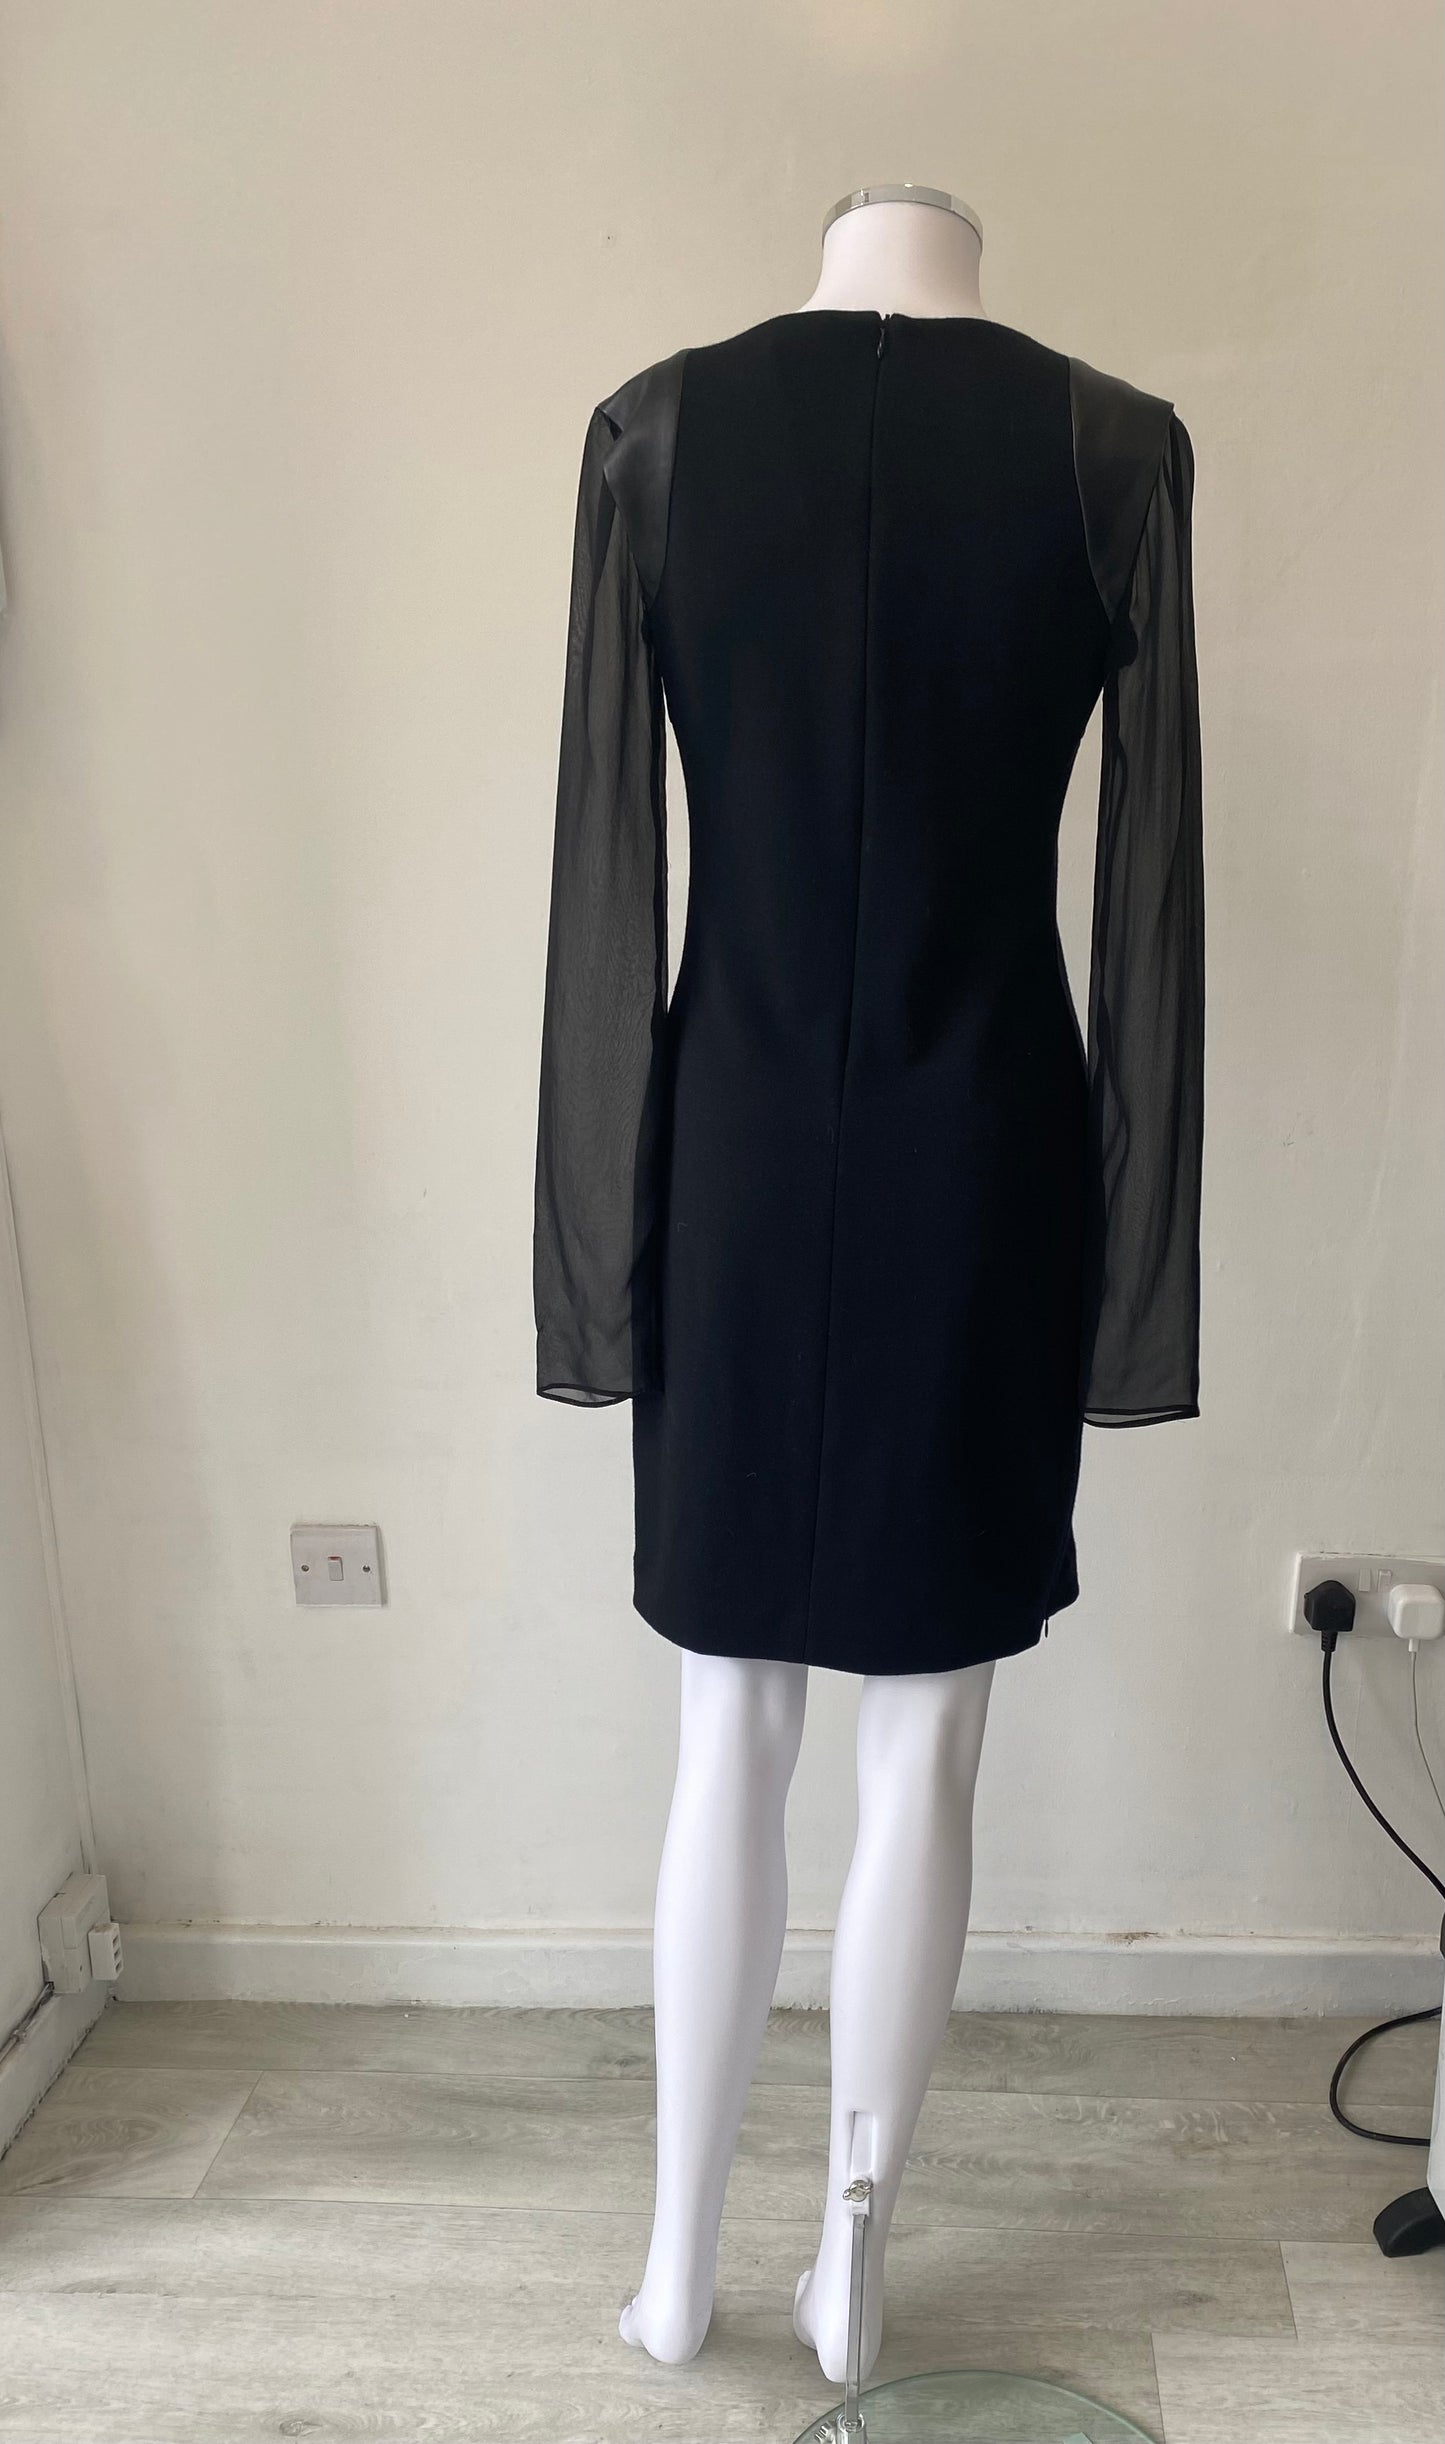 Joseph Black Dress Size 8